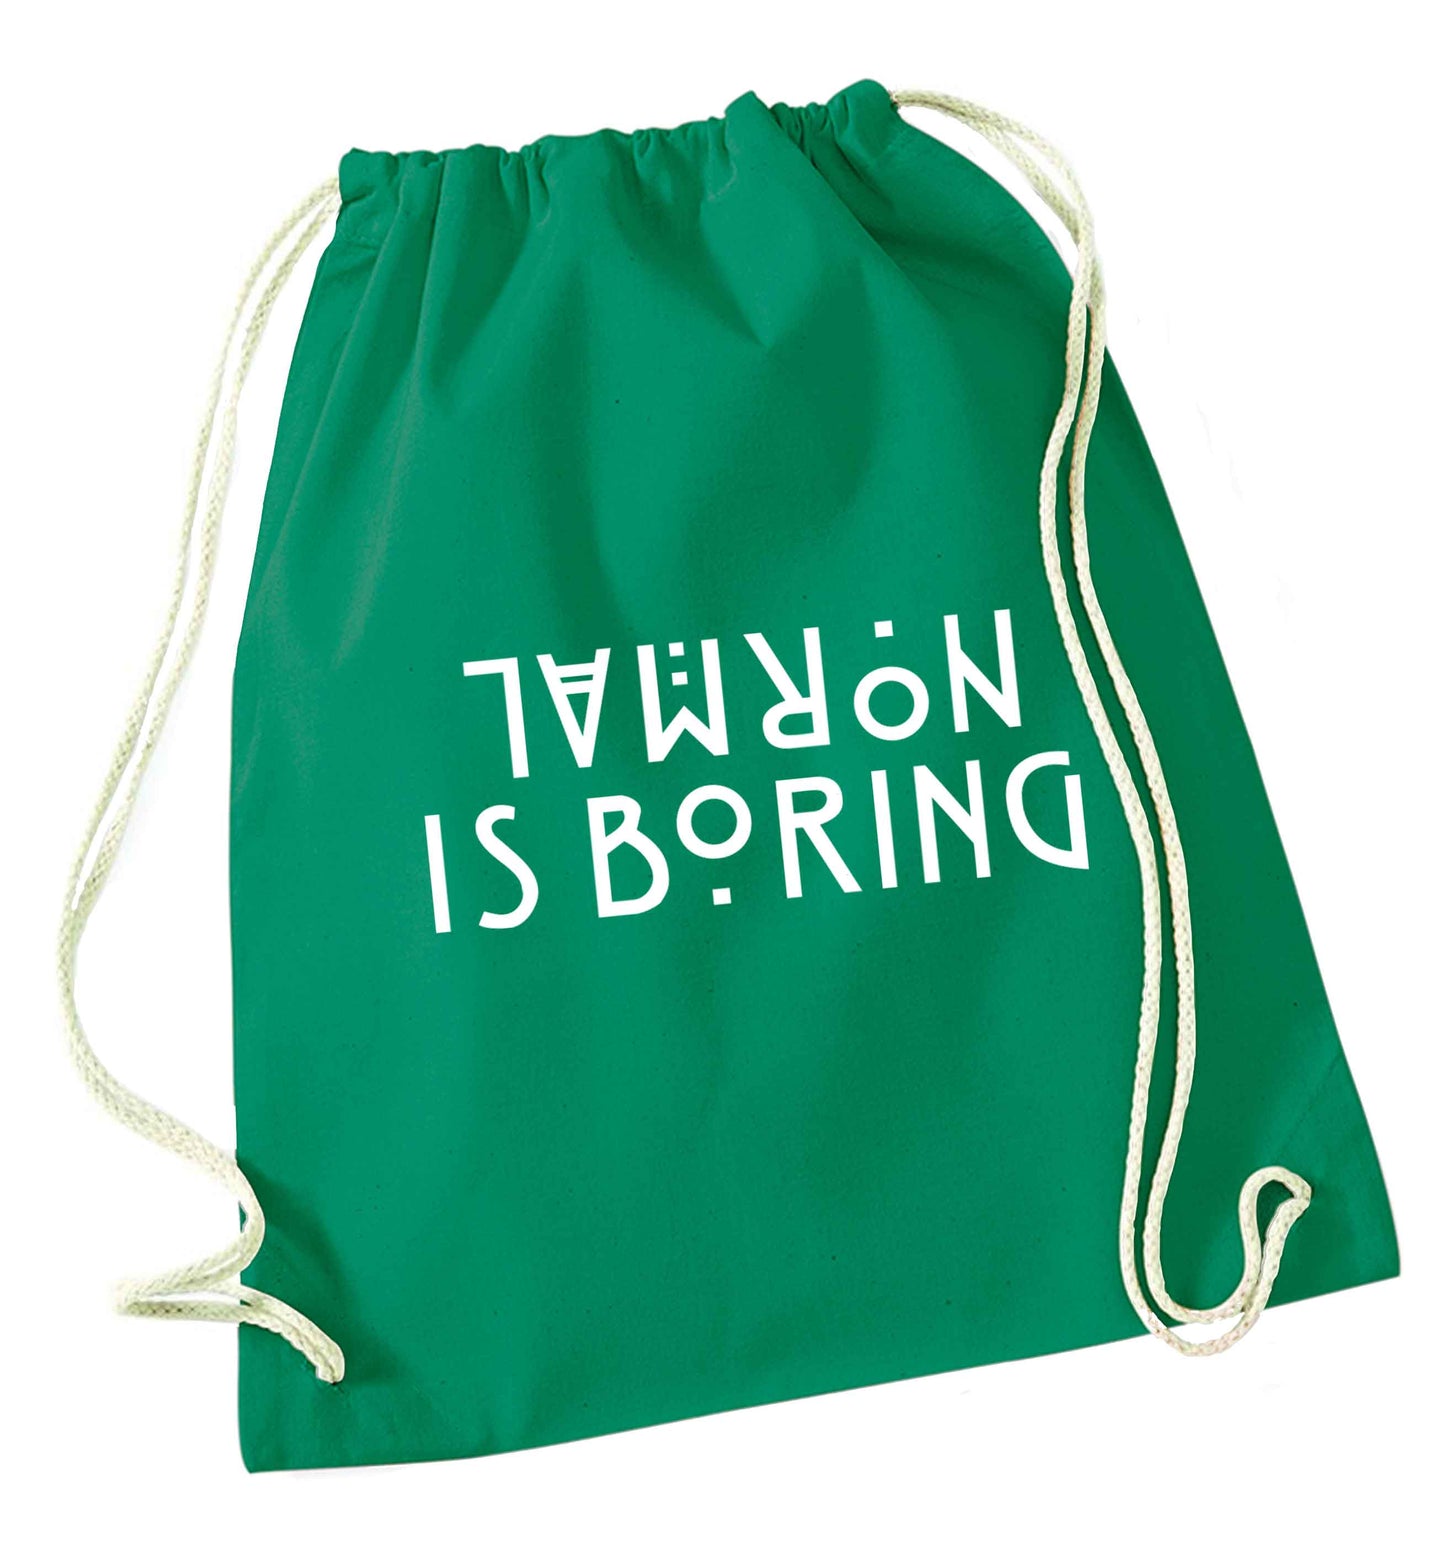 Normal is boring green drawstring bag